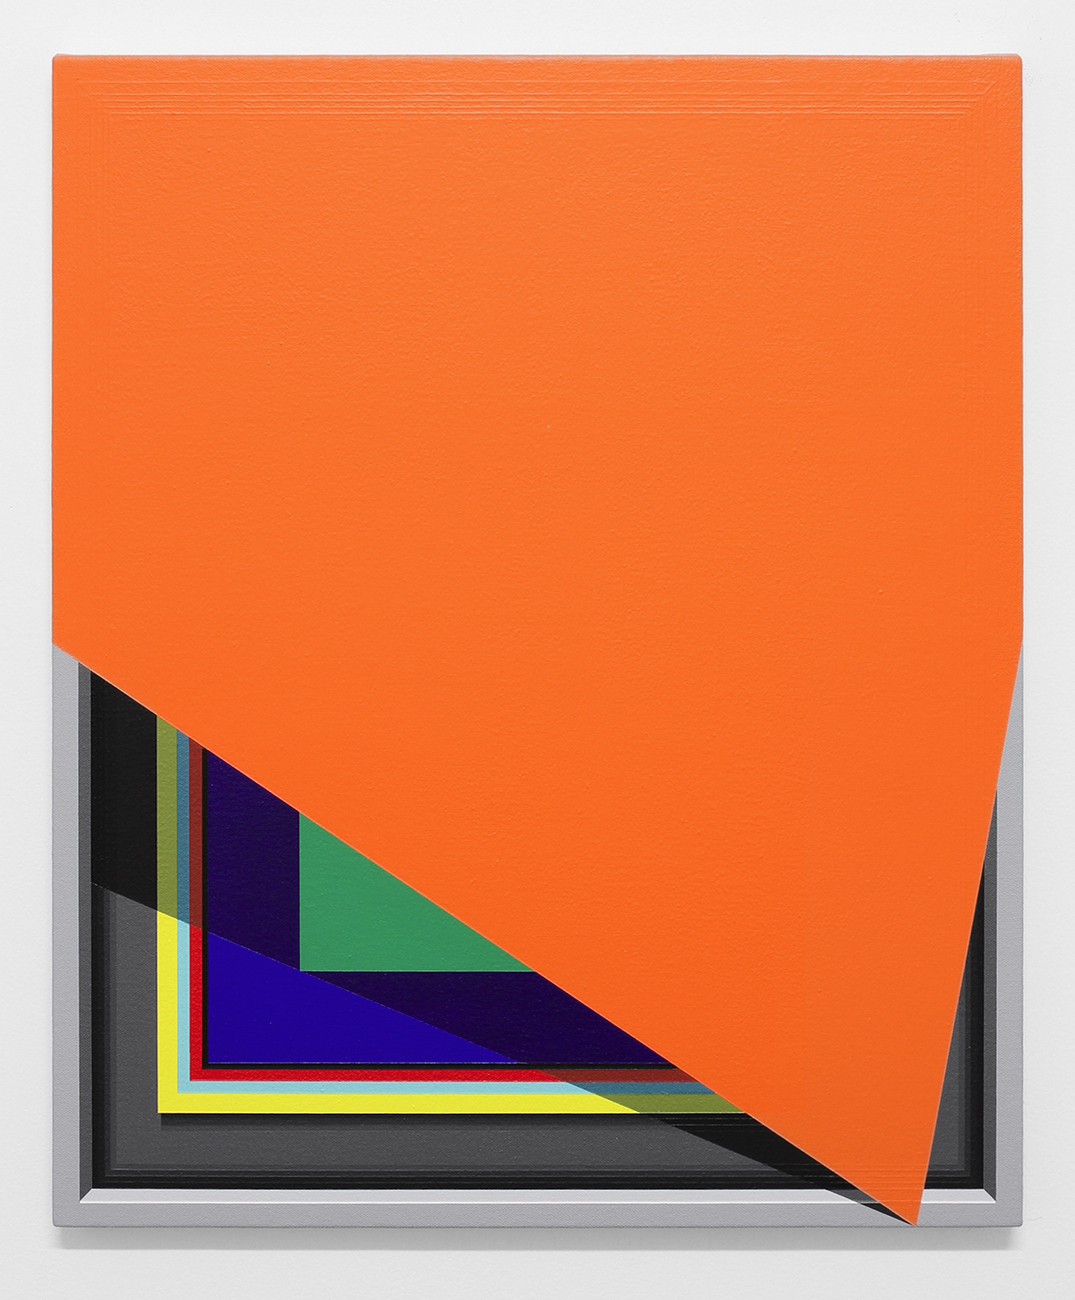   Severed Hue (Orange)   2013  Acrylic on canvas  22 x 18 inches  (55.88 x 45.72 cm)       